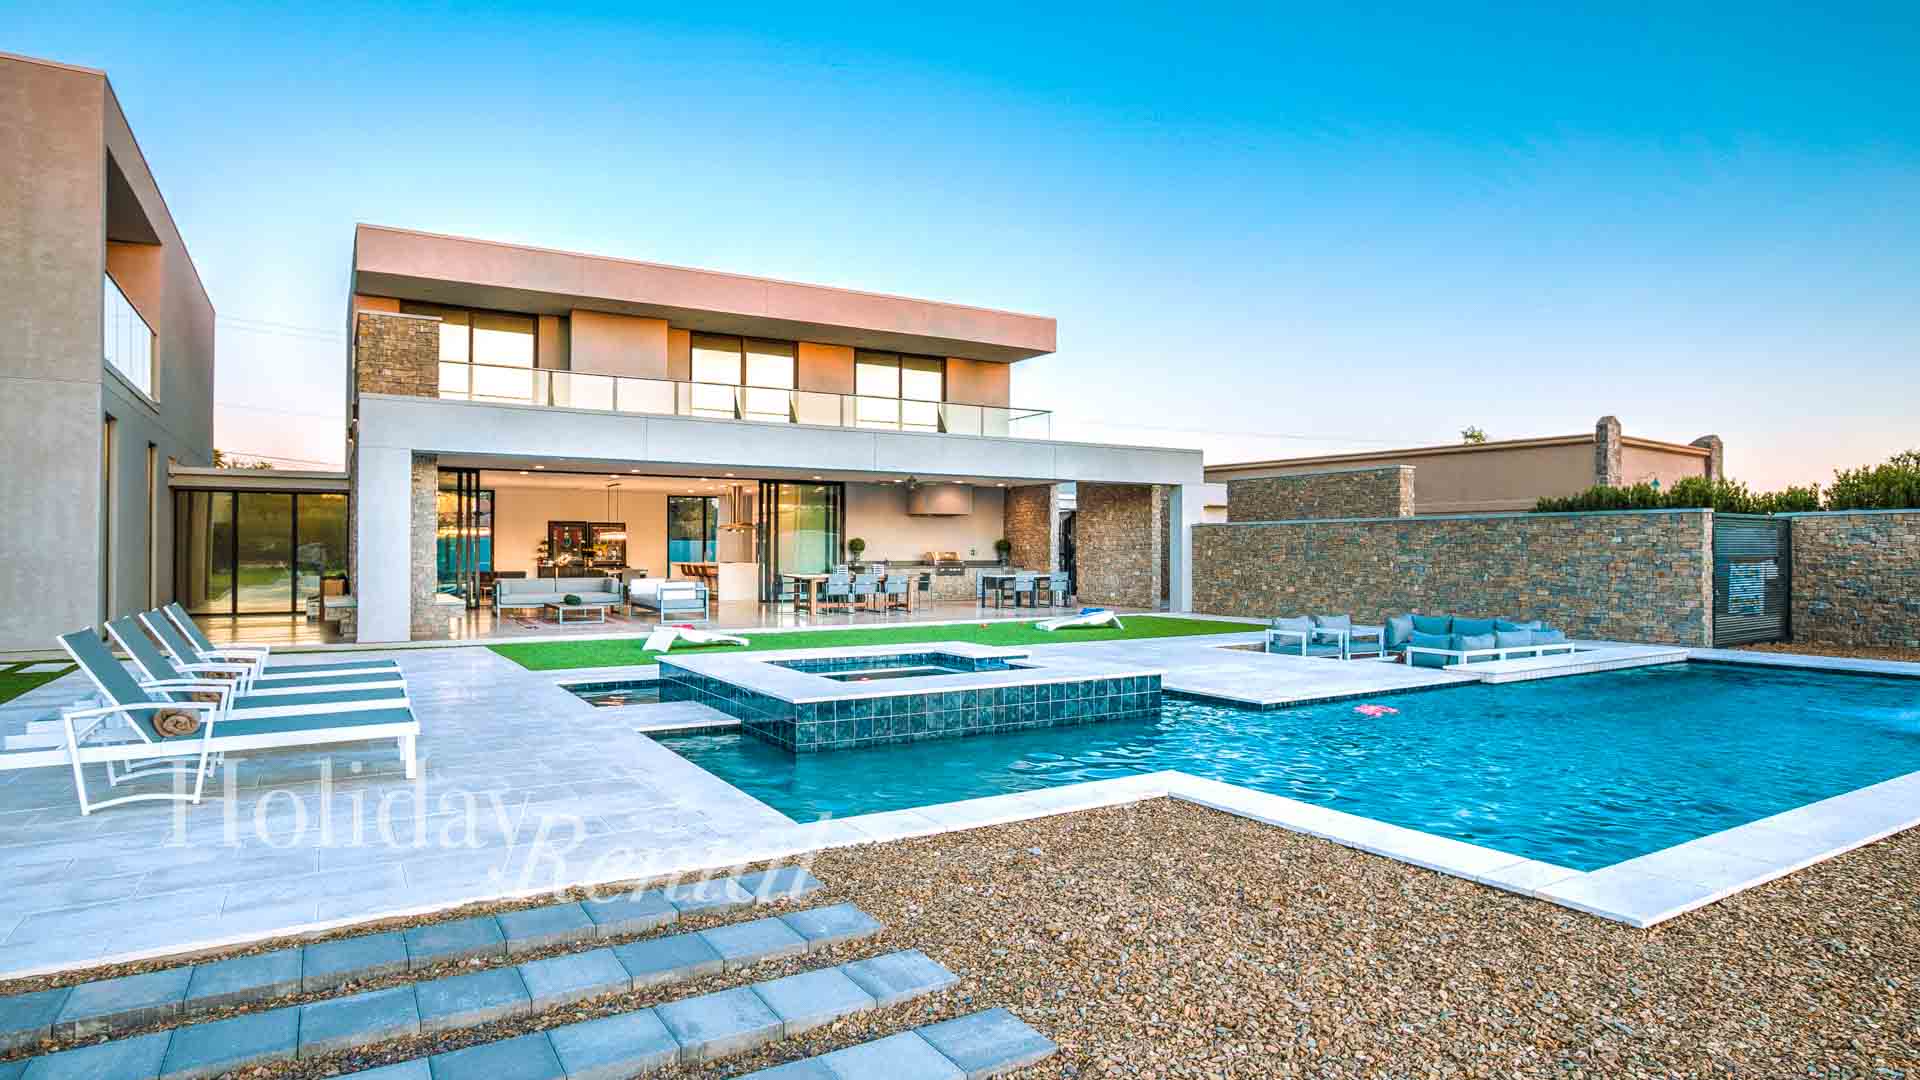 vacation rental beautiful backyard with pool